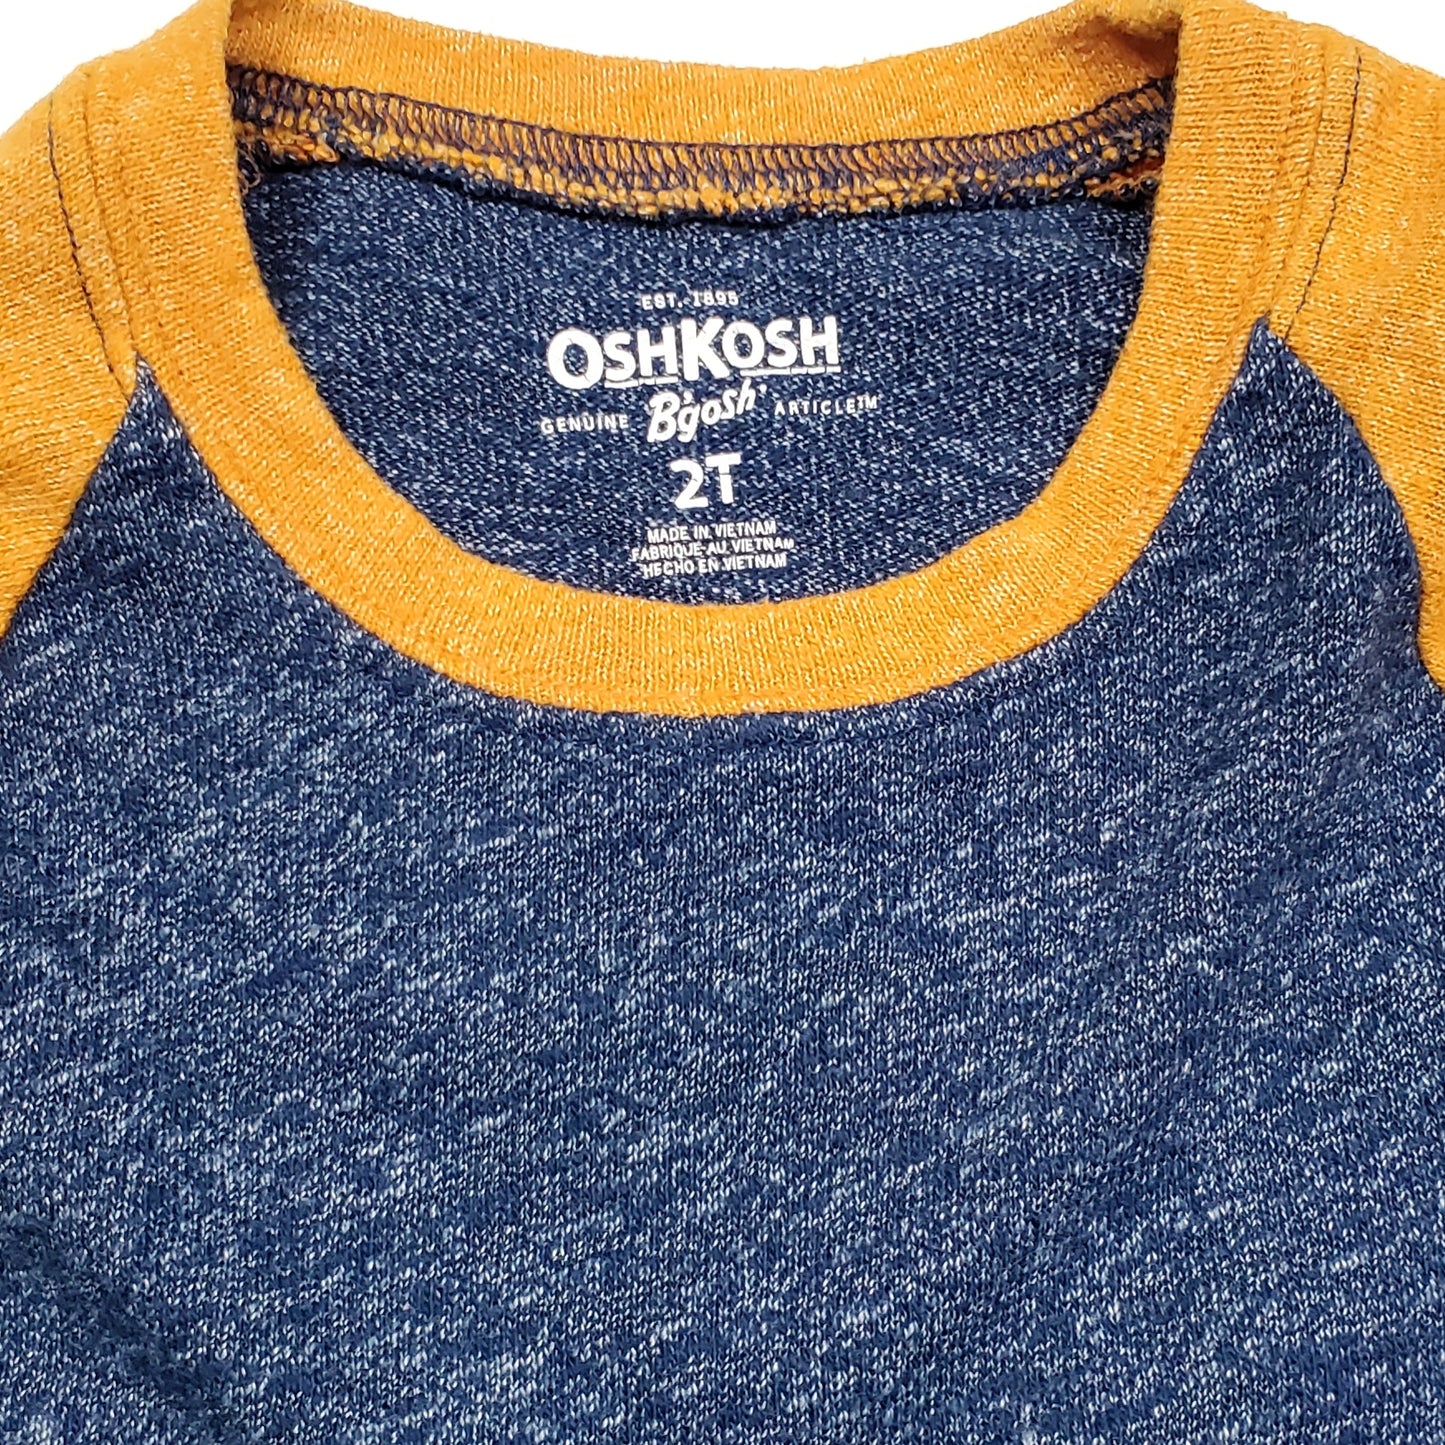 Oshkosh Boys Navy Blue Yellow Shirt 2T Used View 3